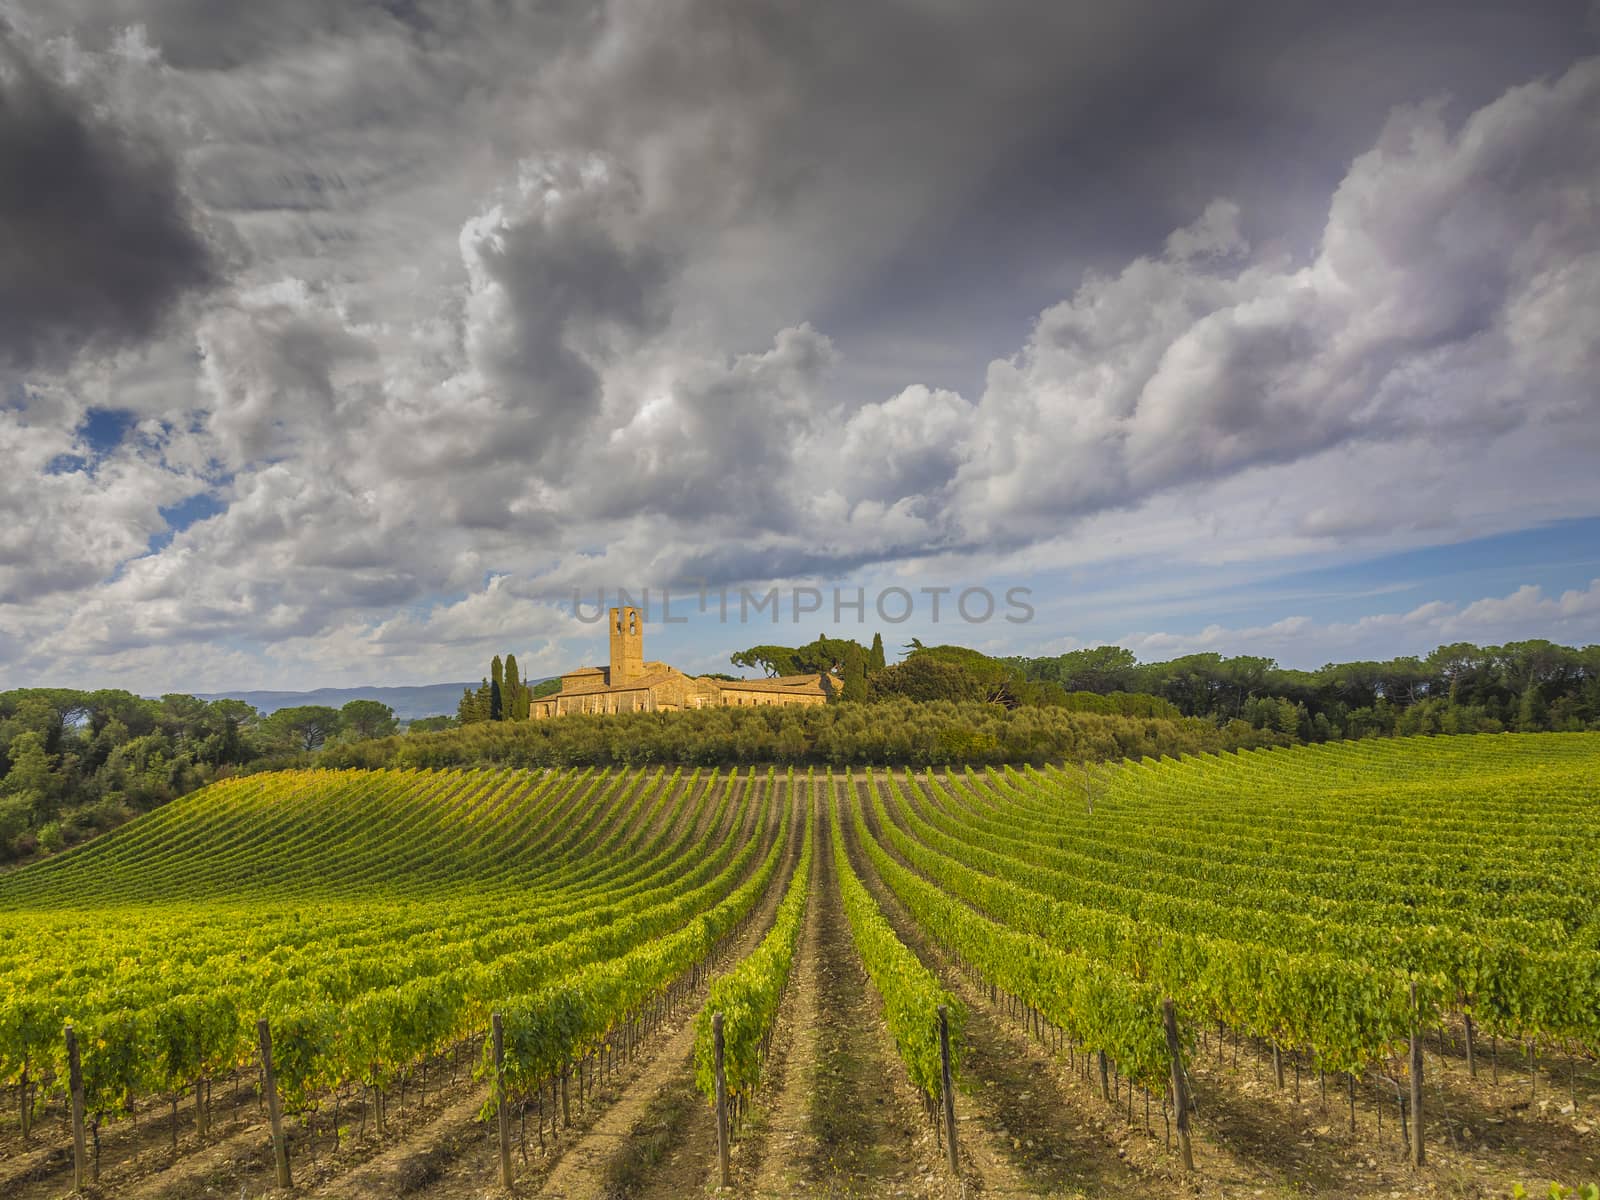 Vineyards located in Chianti, bordering Tuscany